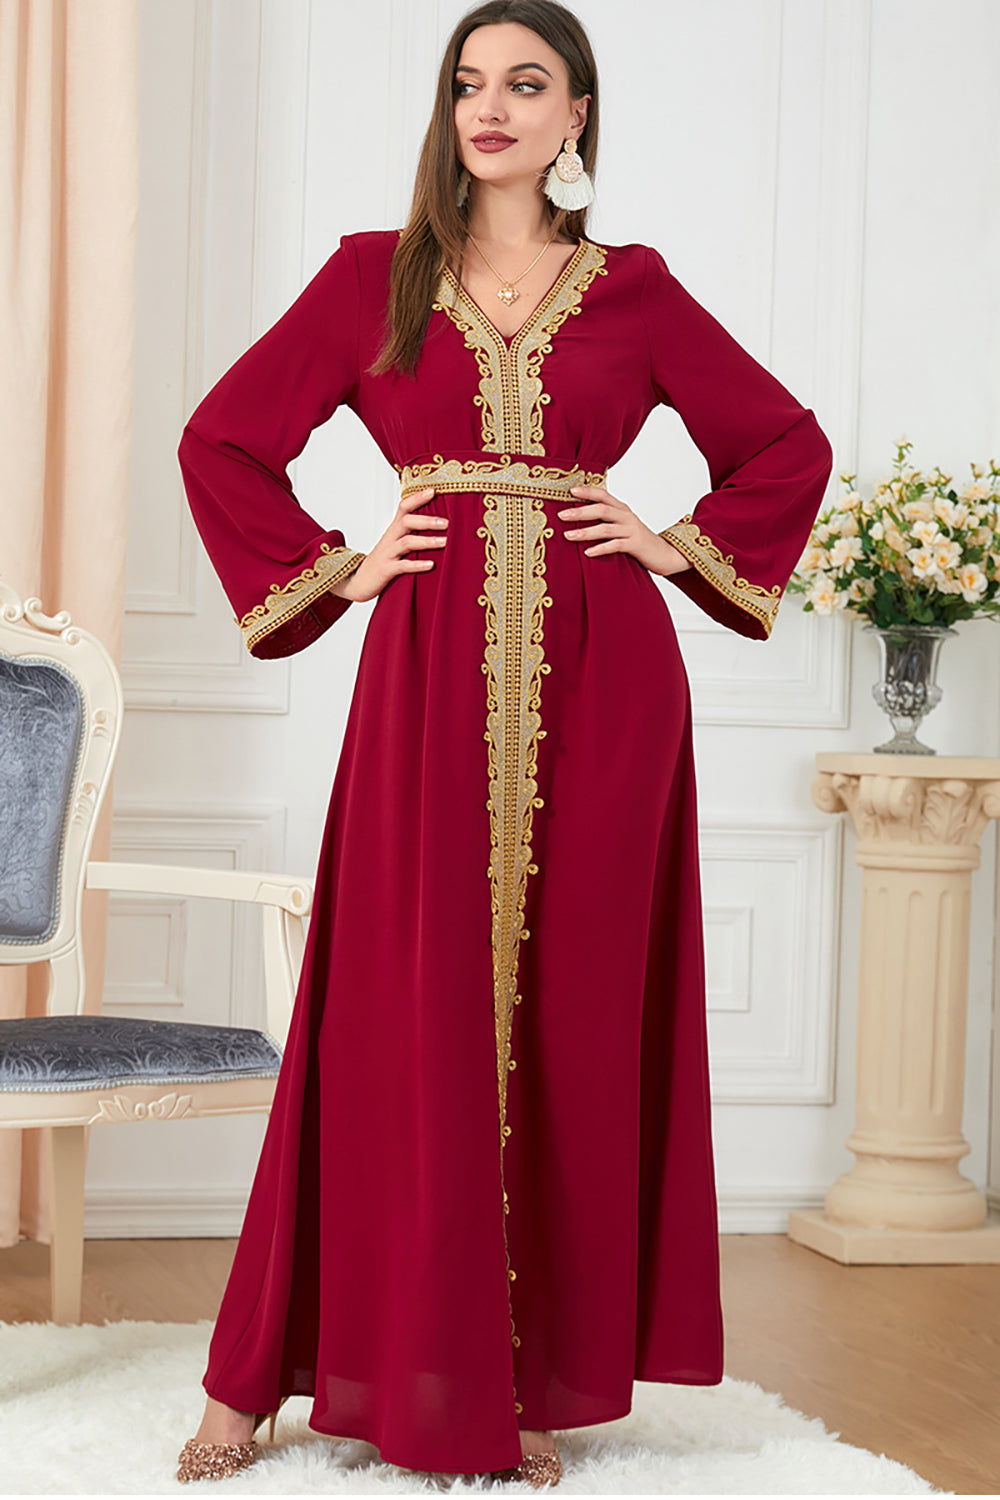 Rouge Arabe Dubai Abaya Robe Islamique Caftan Marocain avec Ceinture